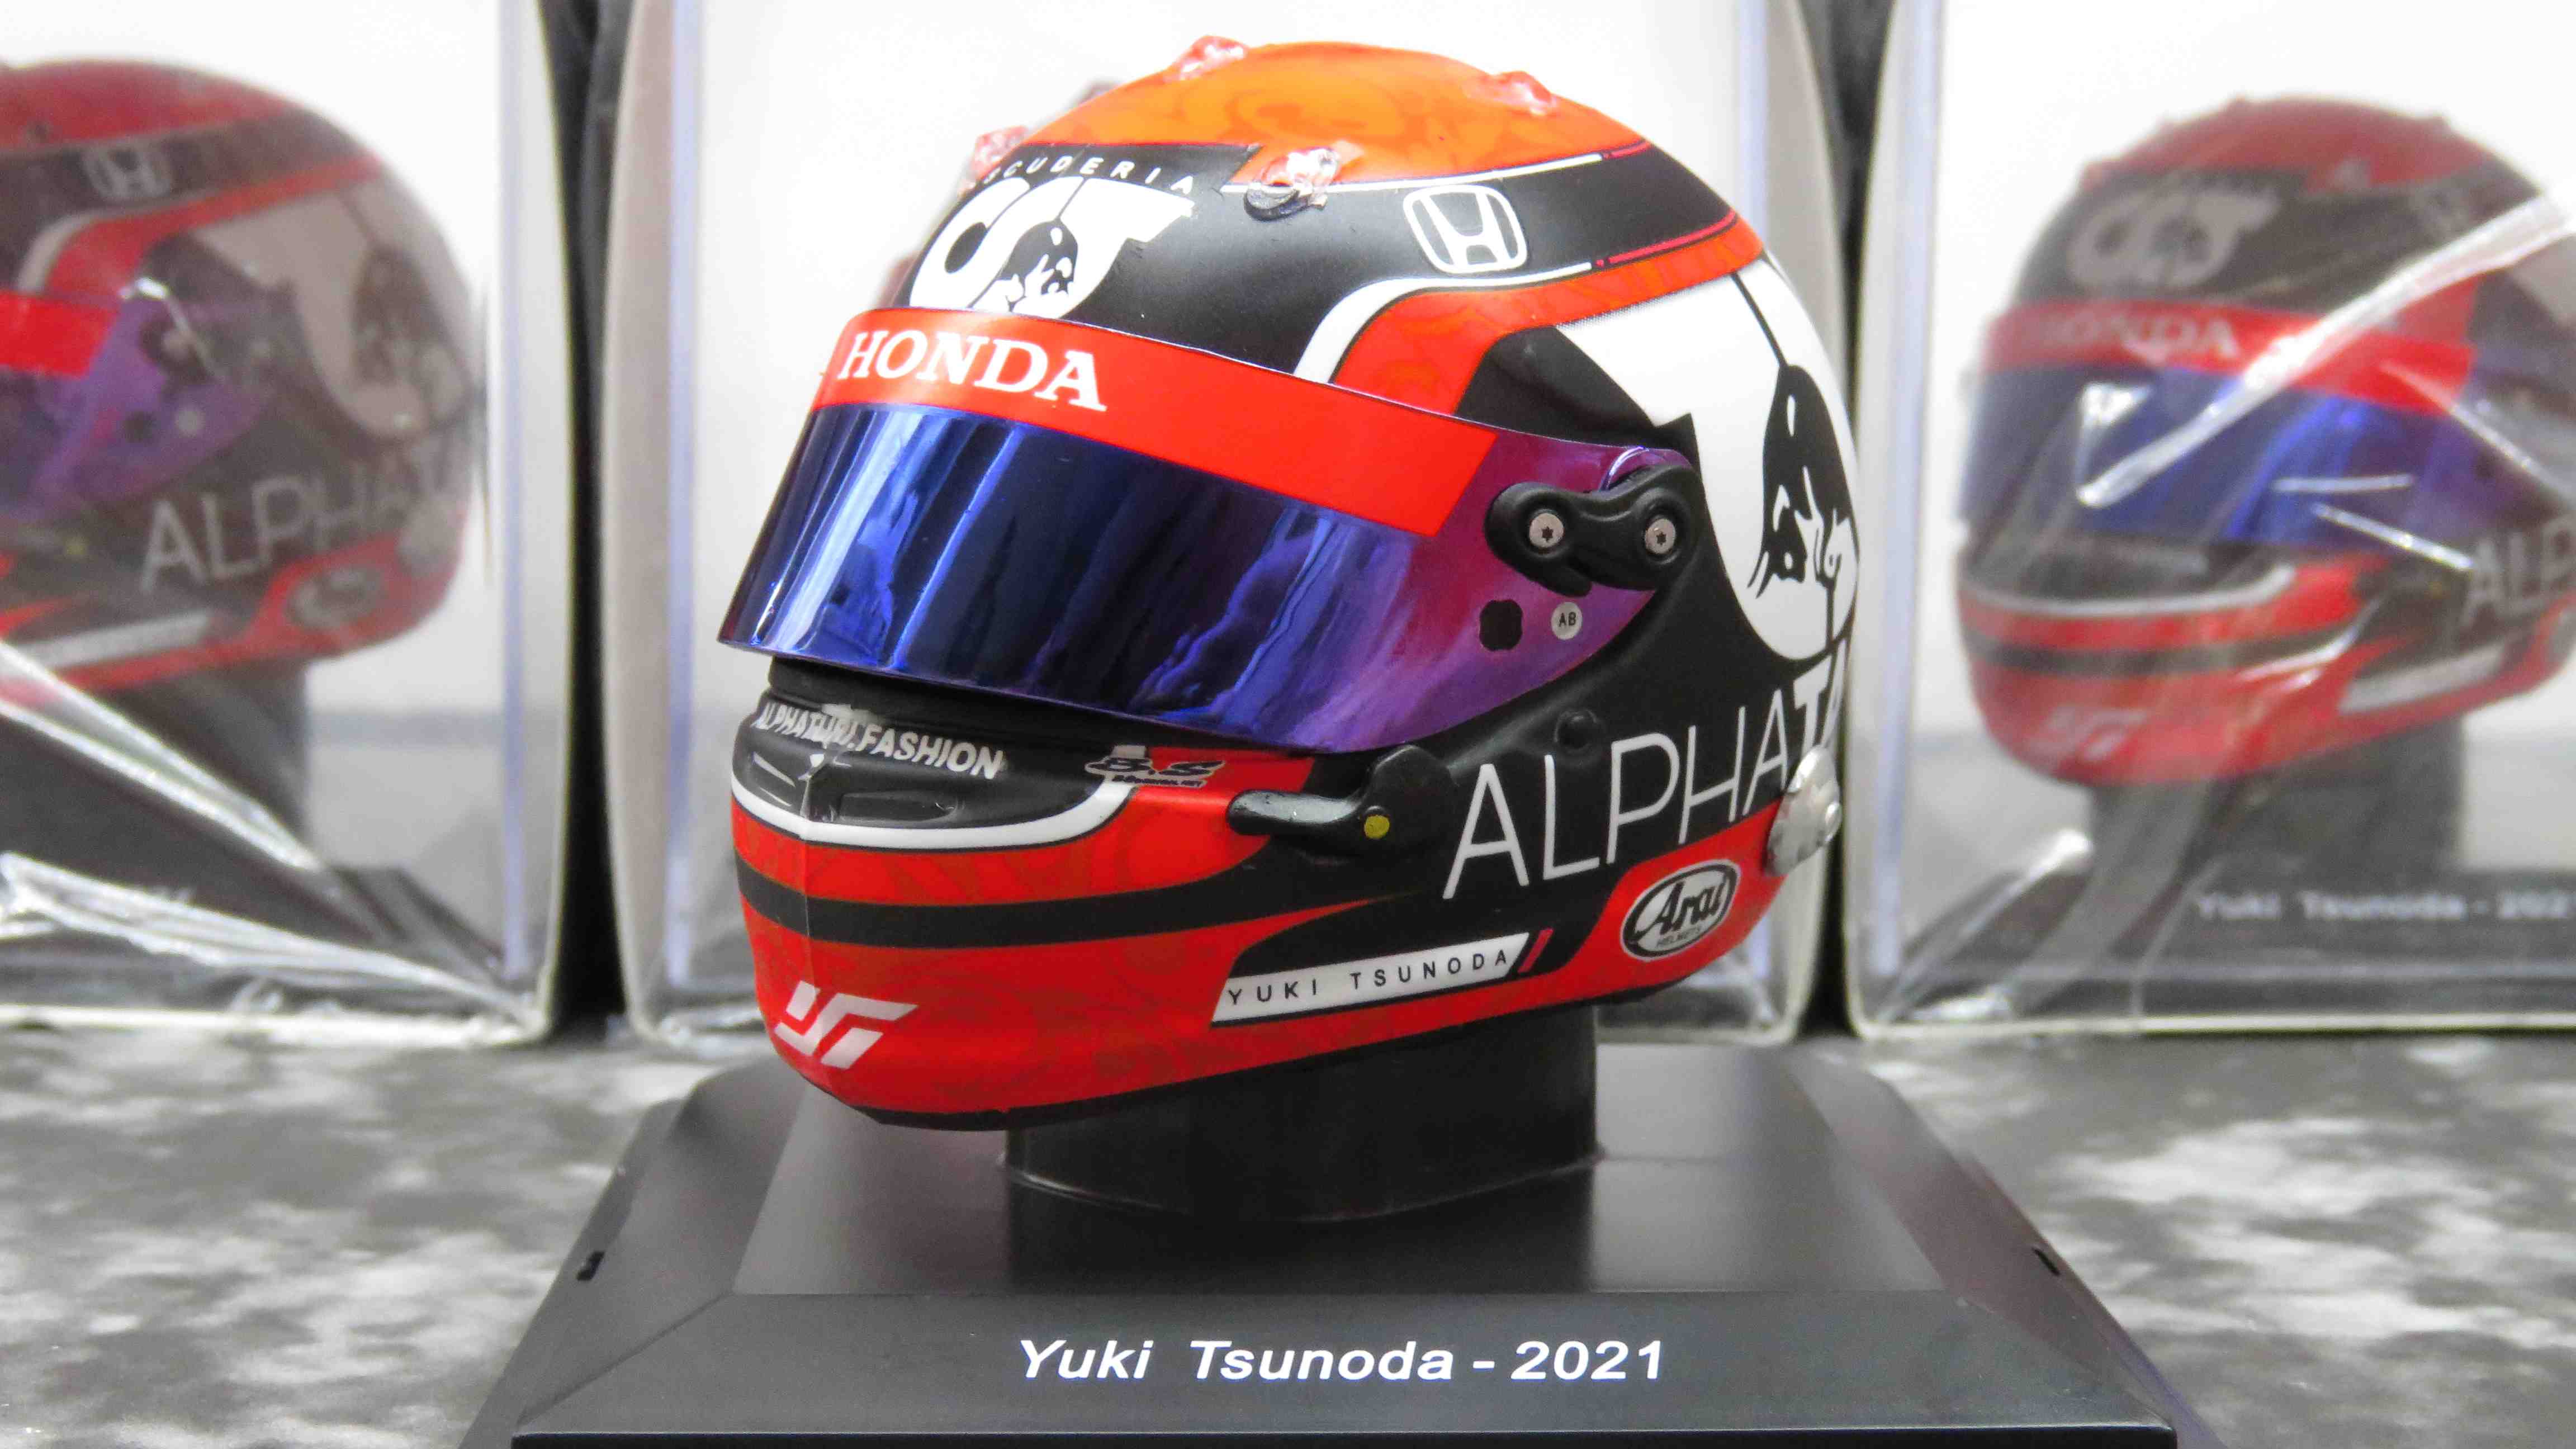 Yuki Tsunoda - AlphaTauri - 2021 /Spark 5HF057 1:5/